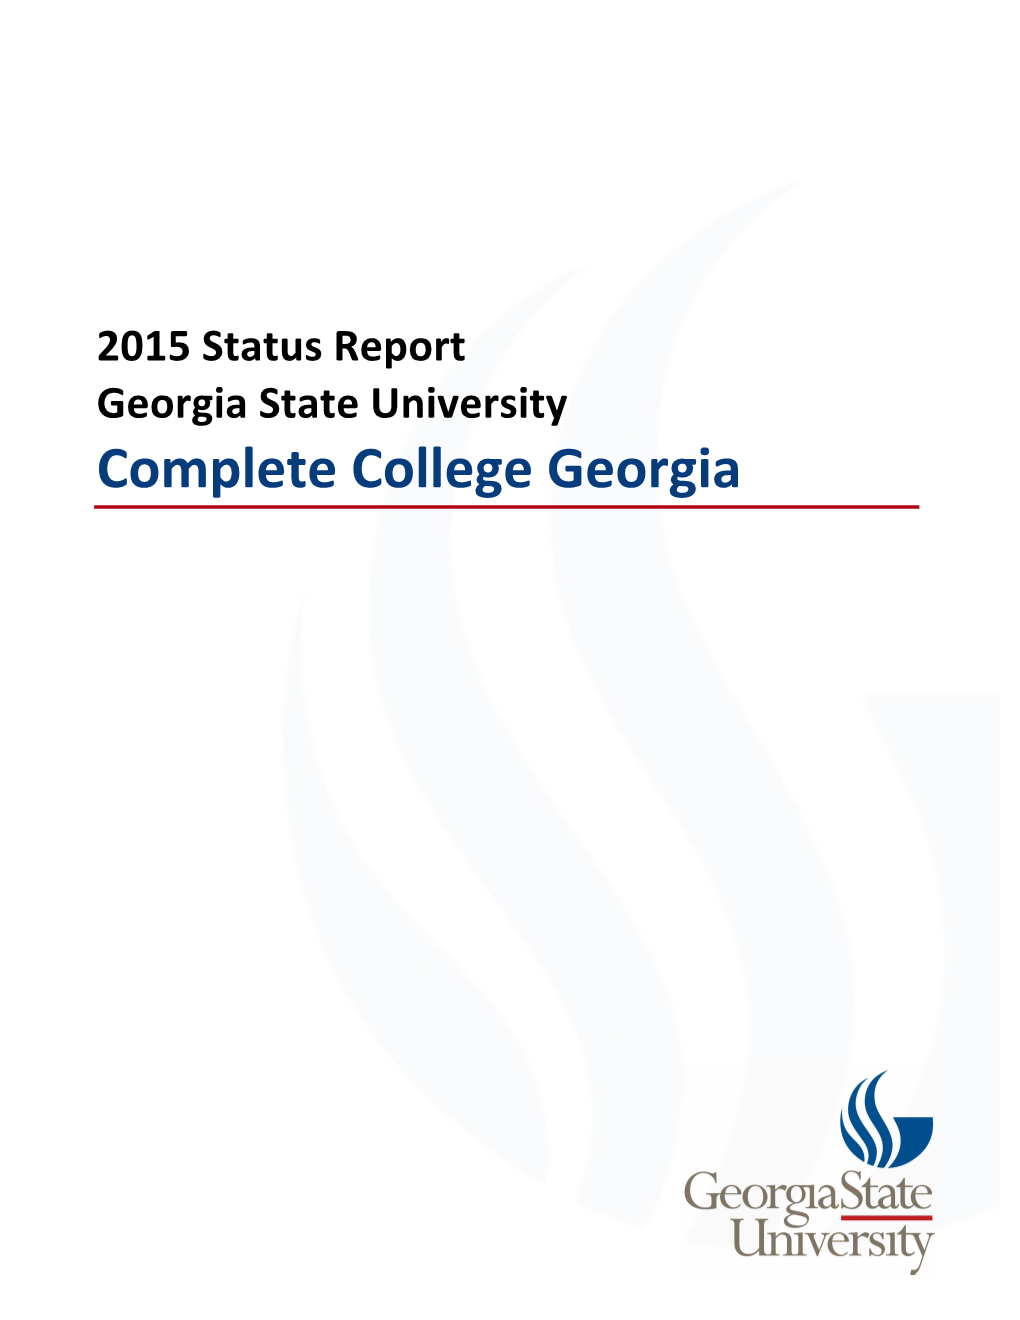 Complete College Georgia